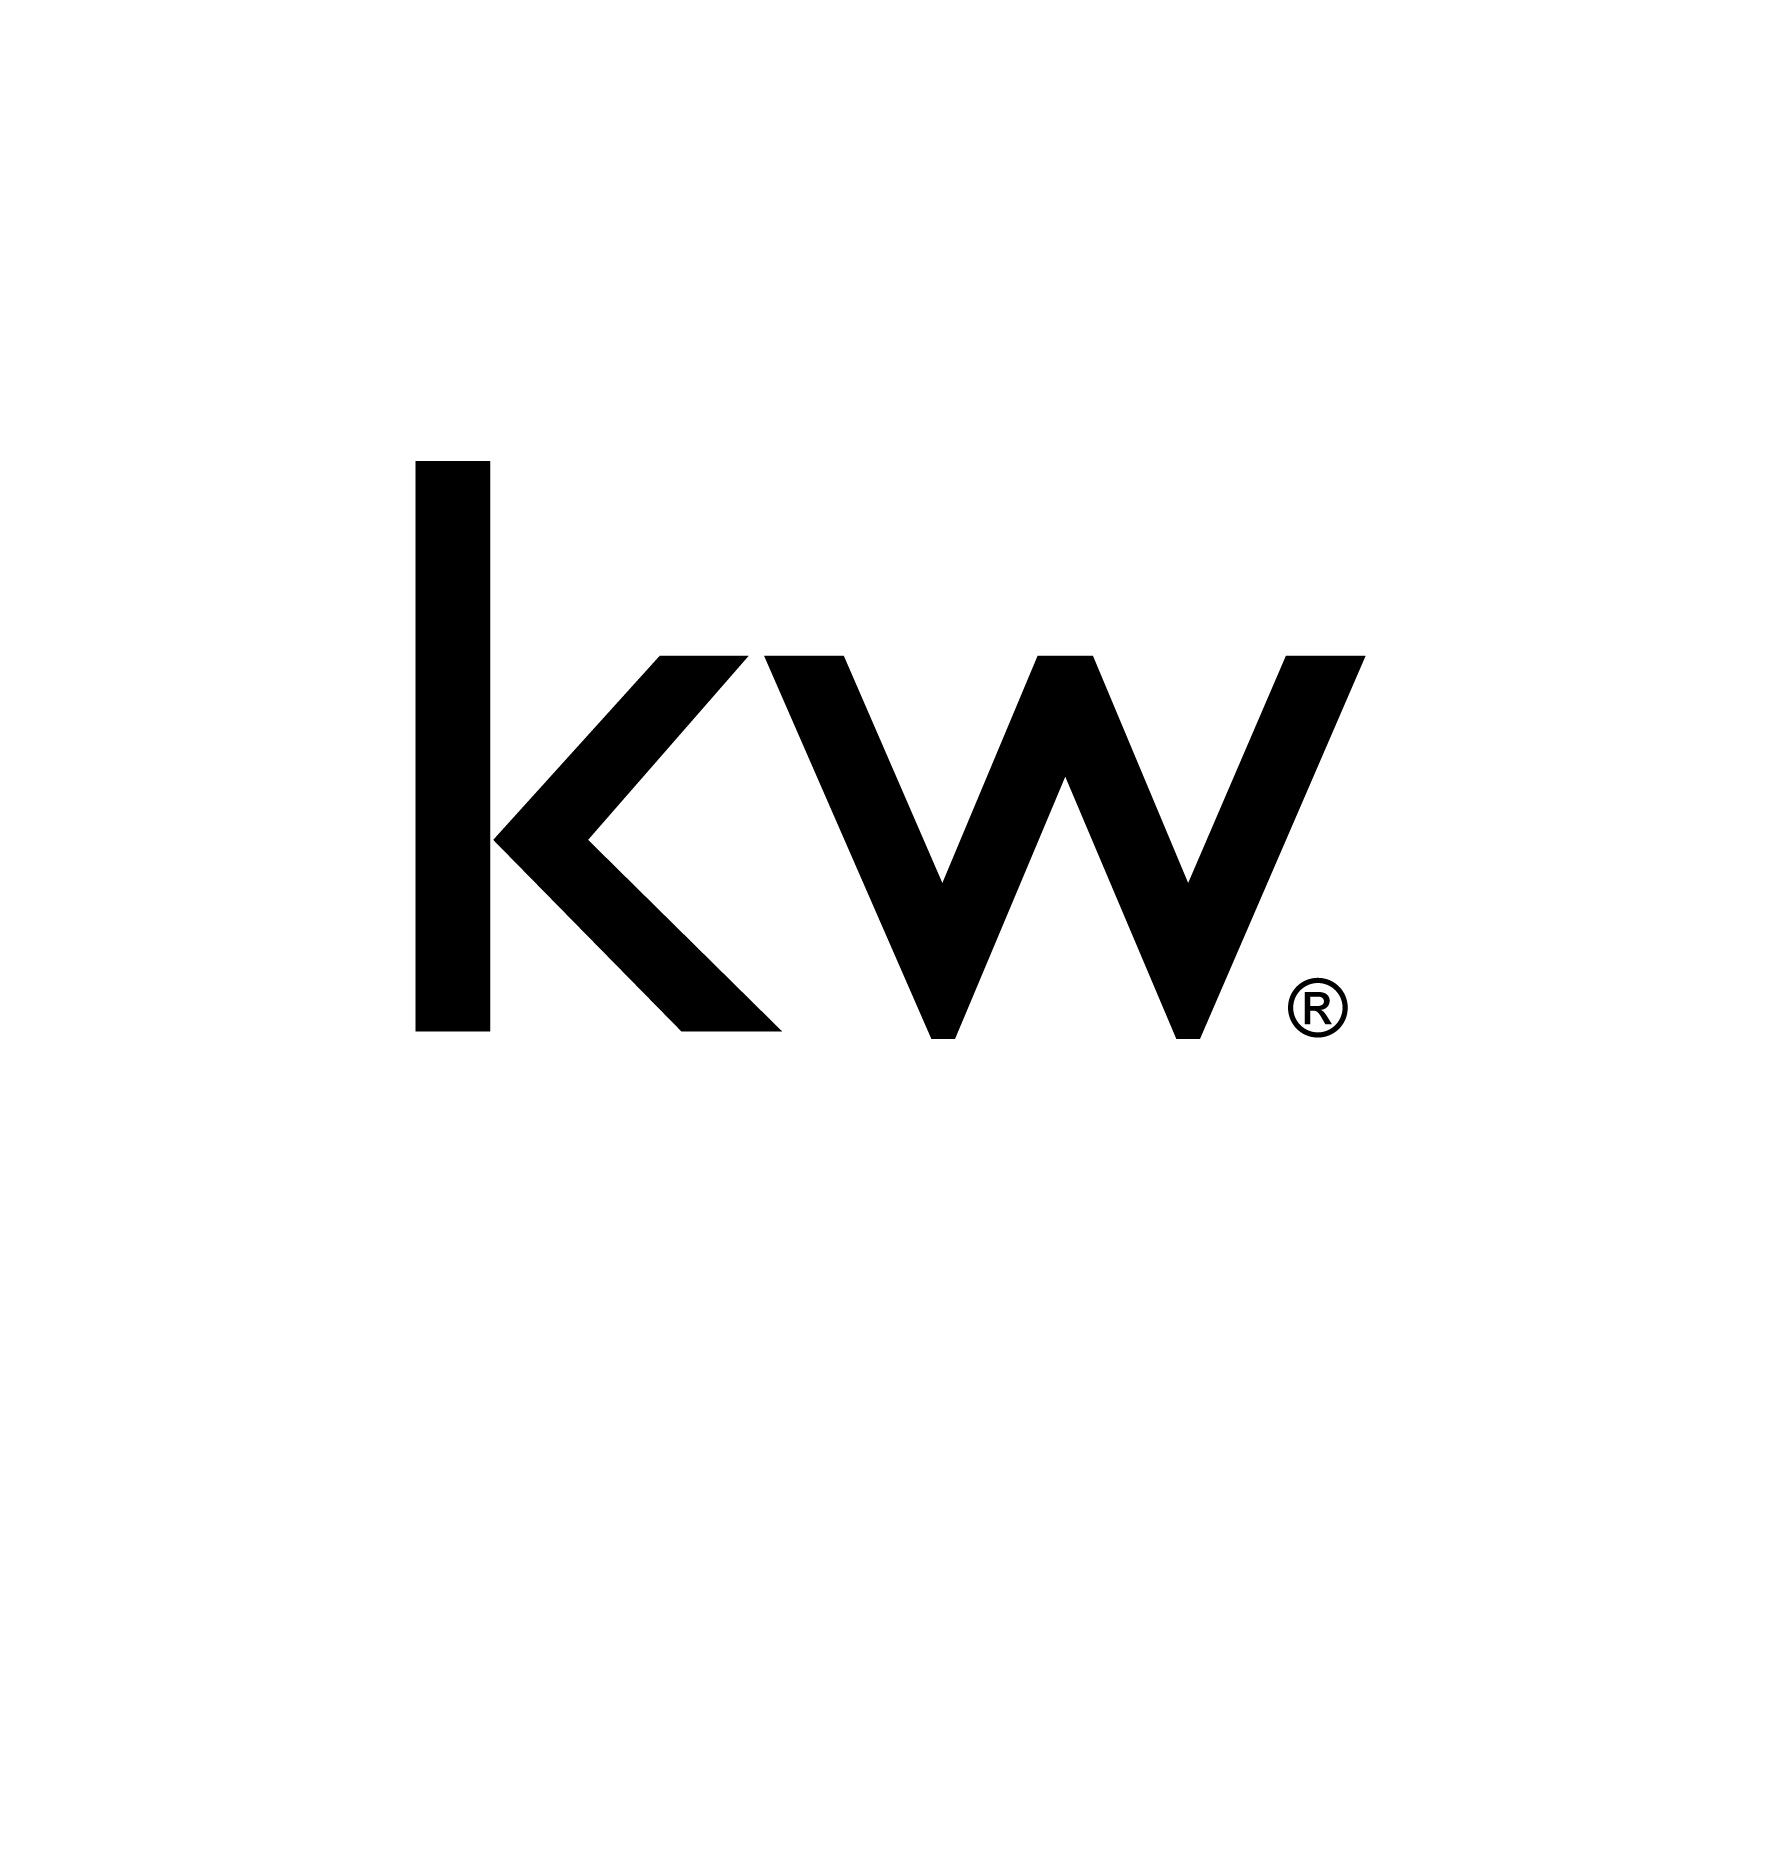 Keller Williams Realty